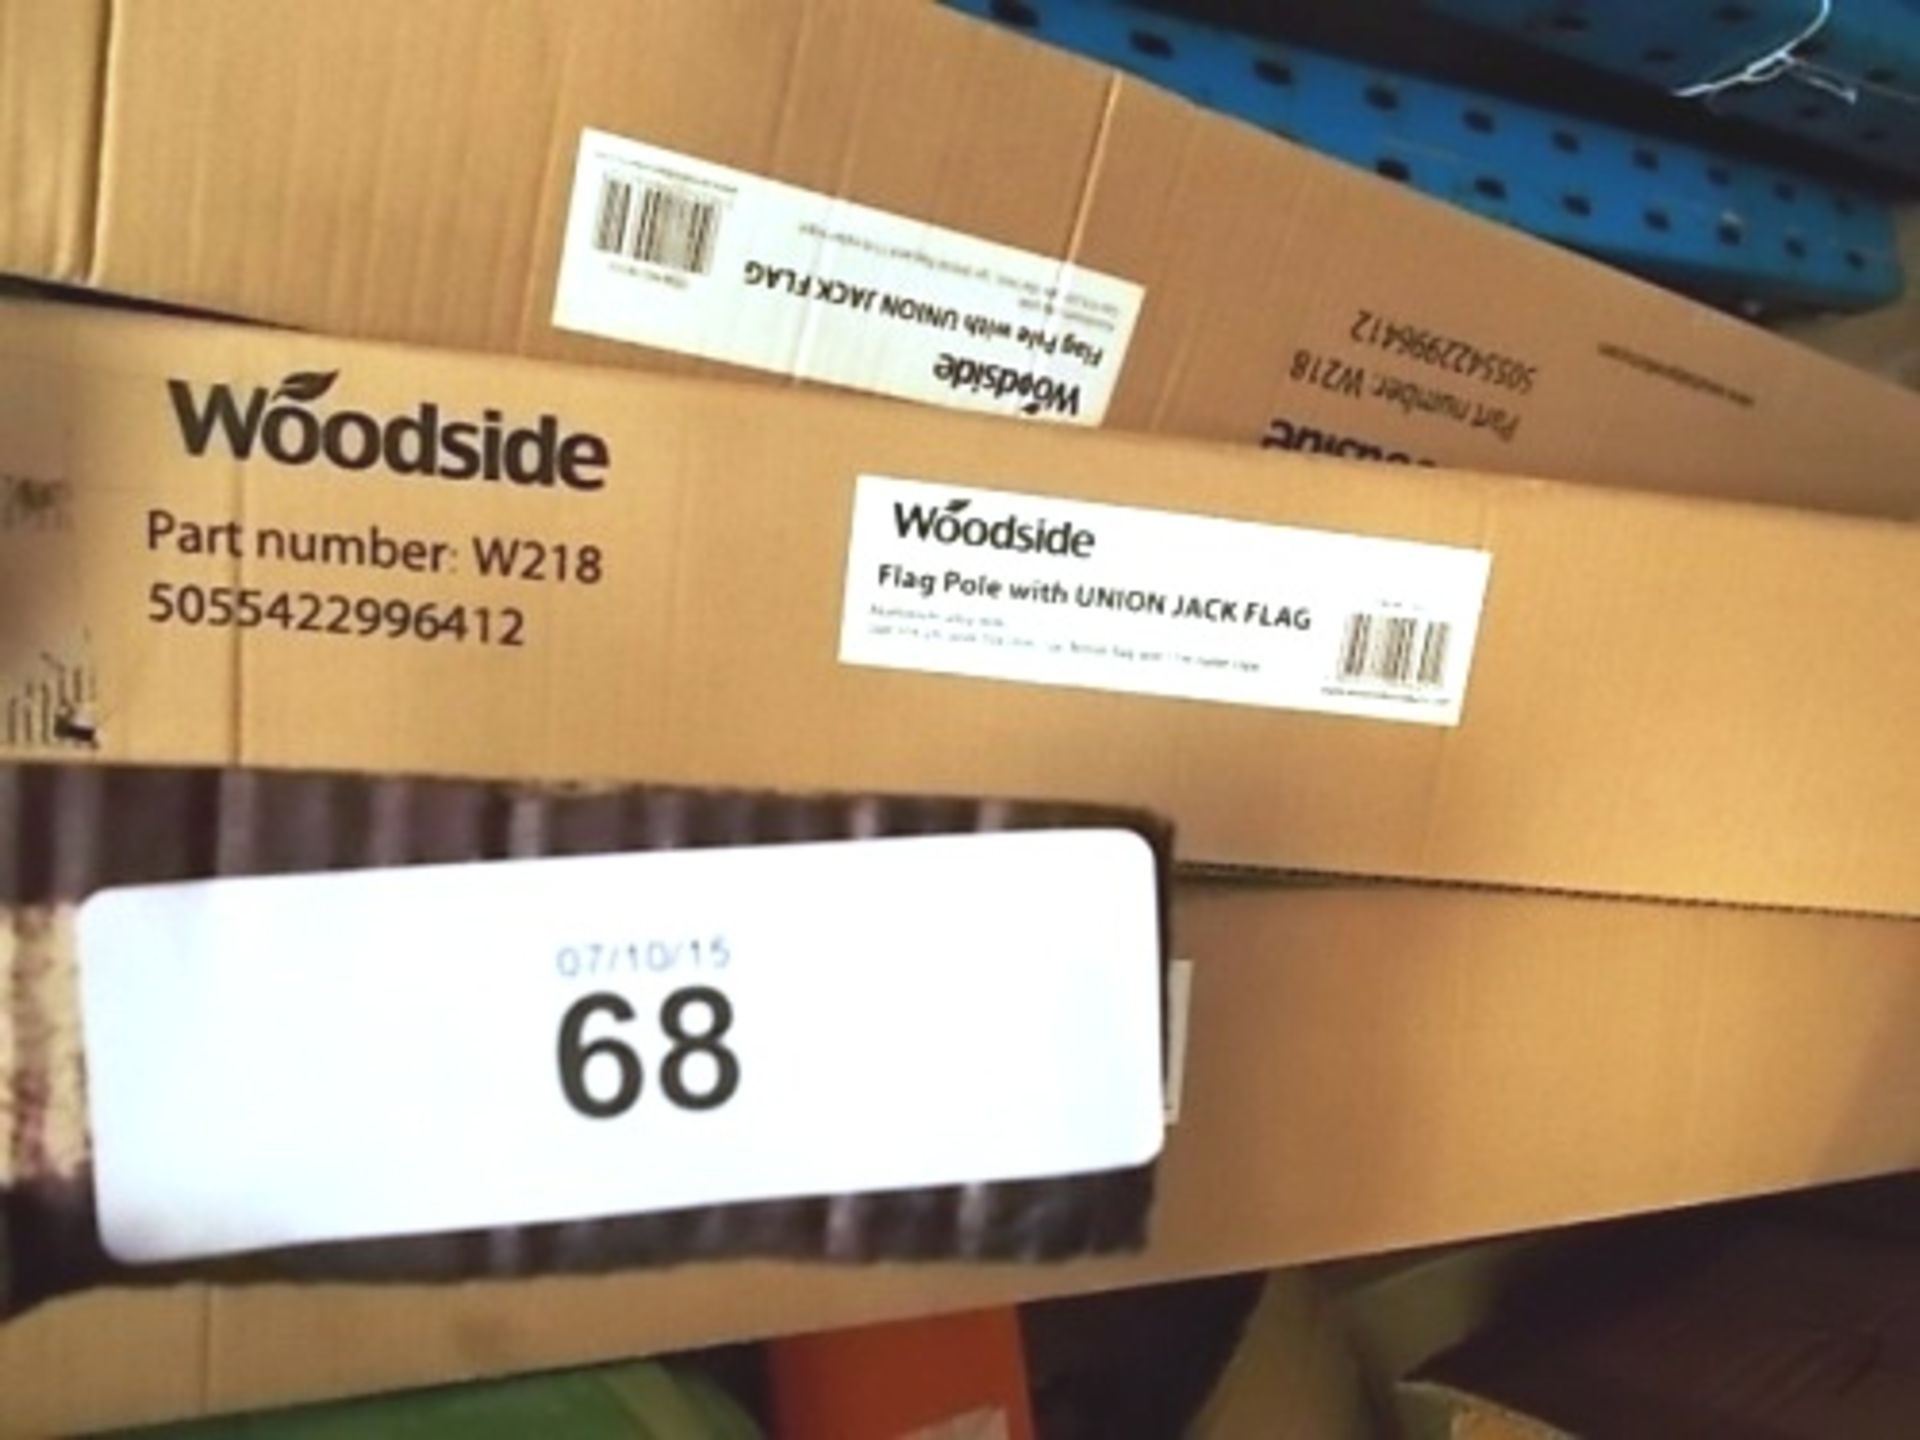 3 x Woodside flagpole with Union Jack flag, item no. WZ18 - New in box